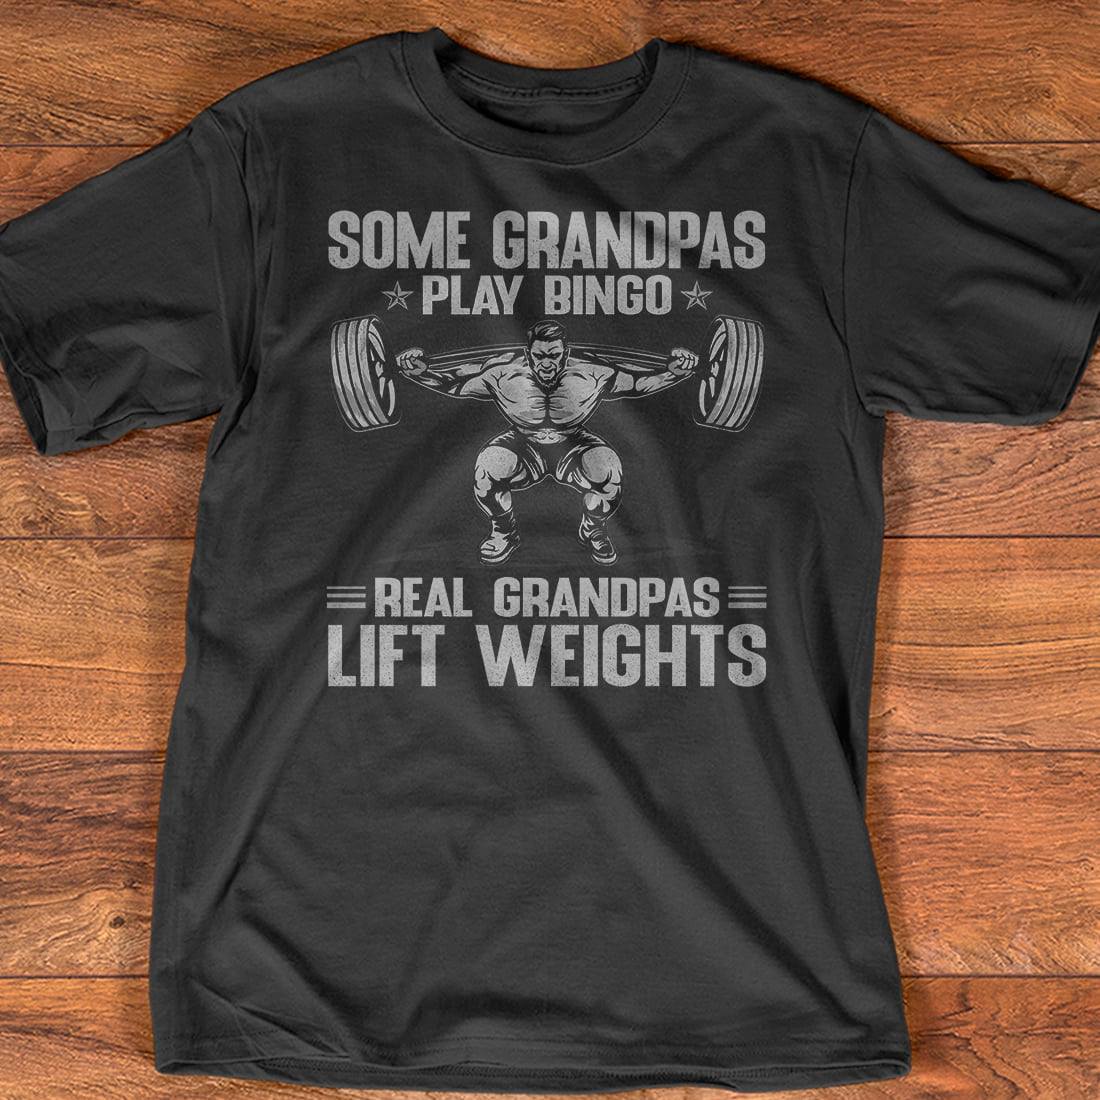 Lift Weights Man - Some grandpas play bingo real grandpas lift weights